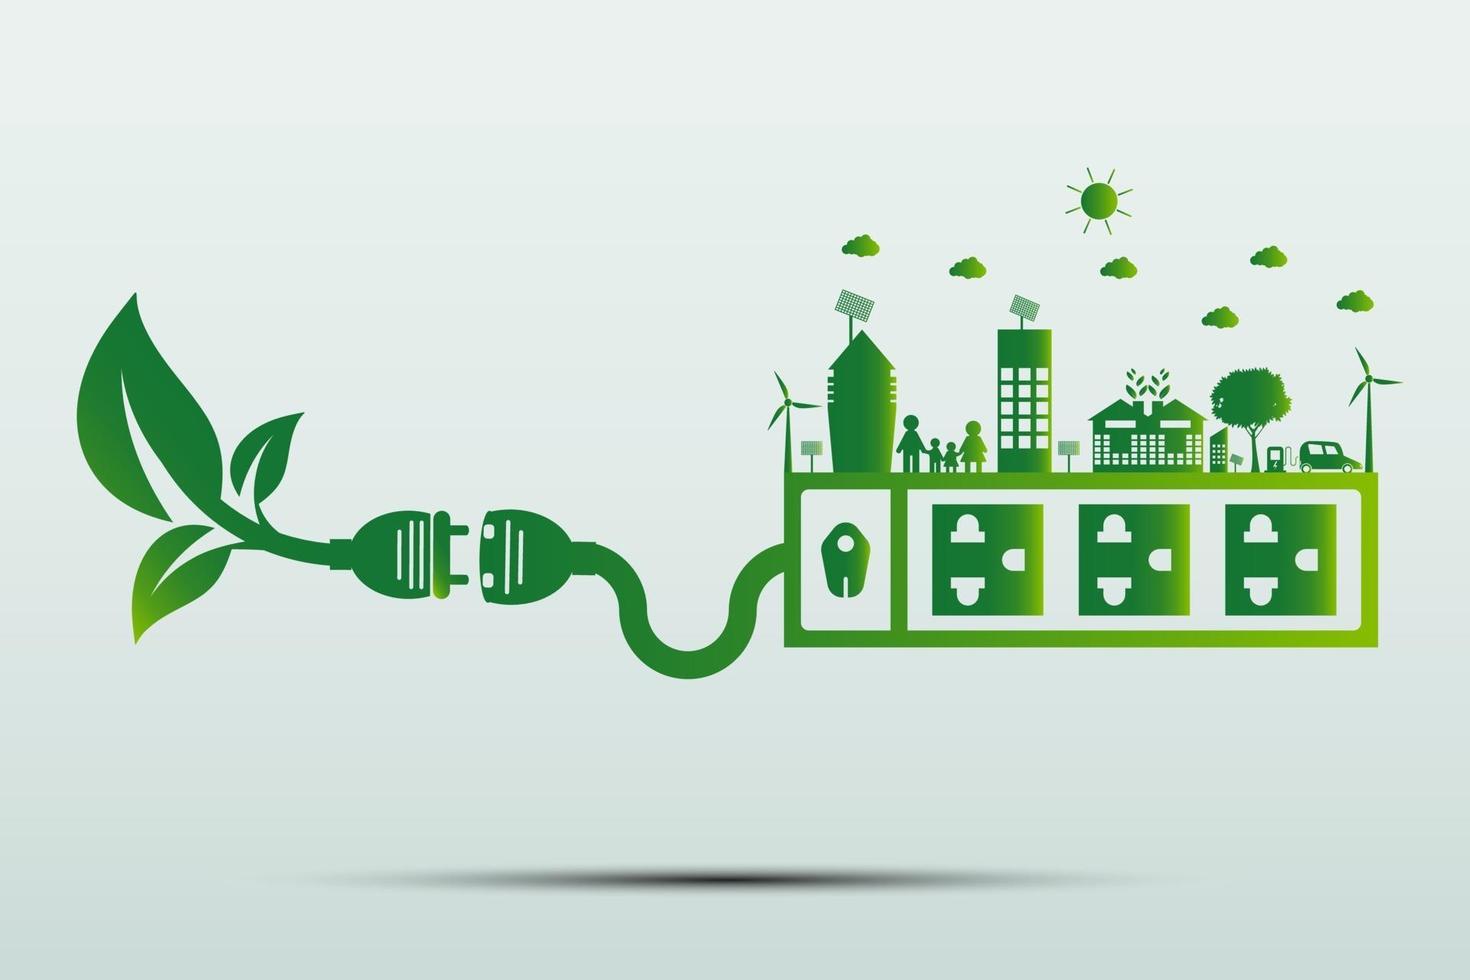 Green energy technology ideas for the environment vector